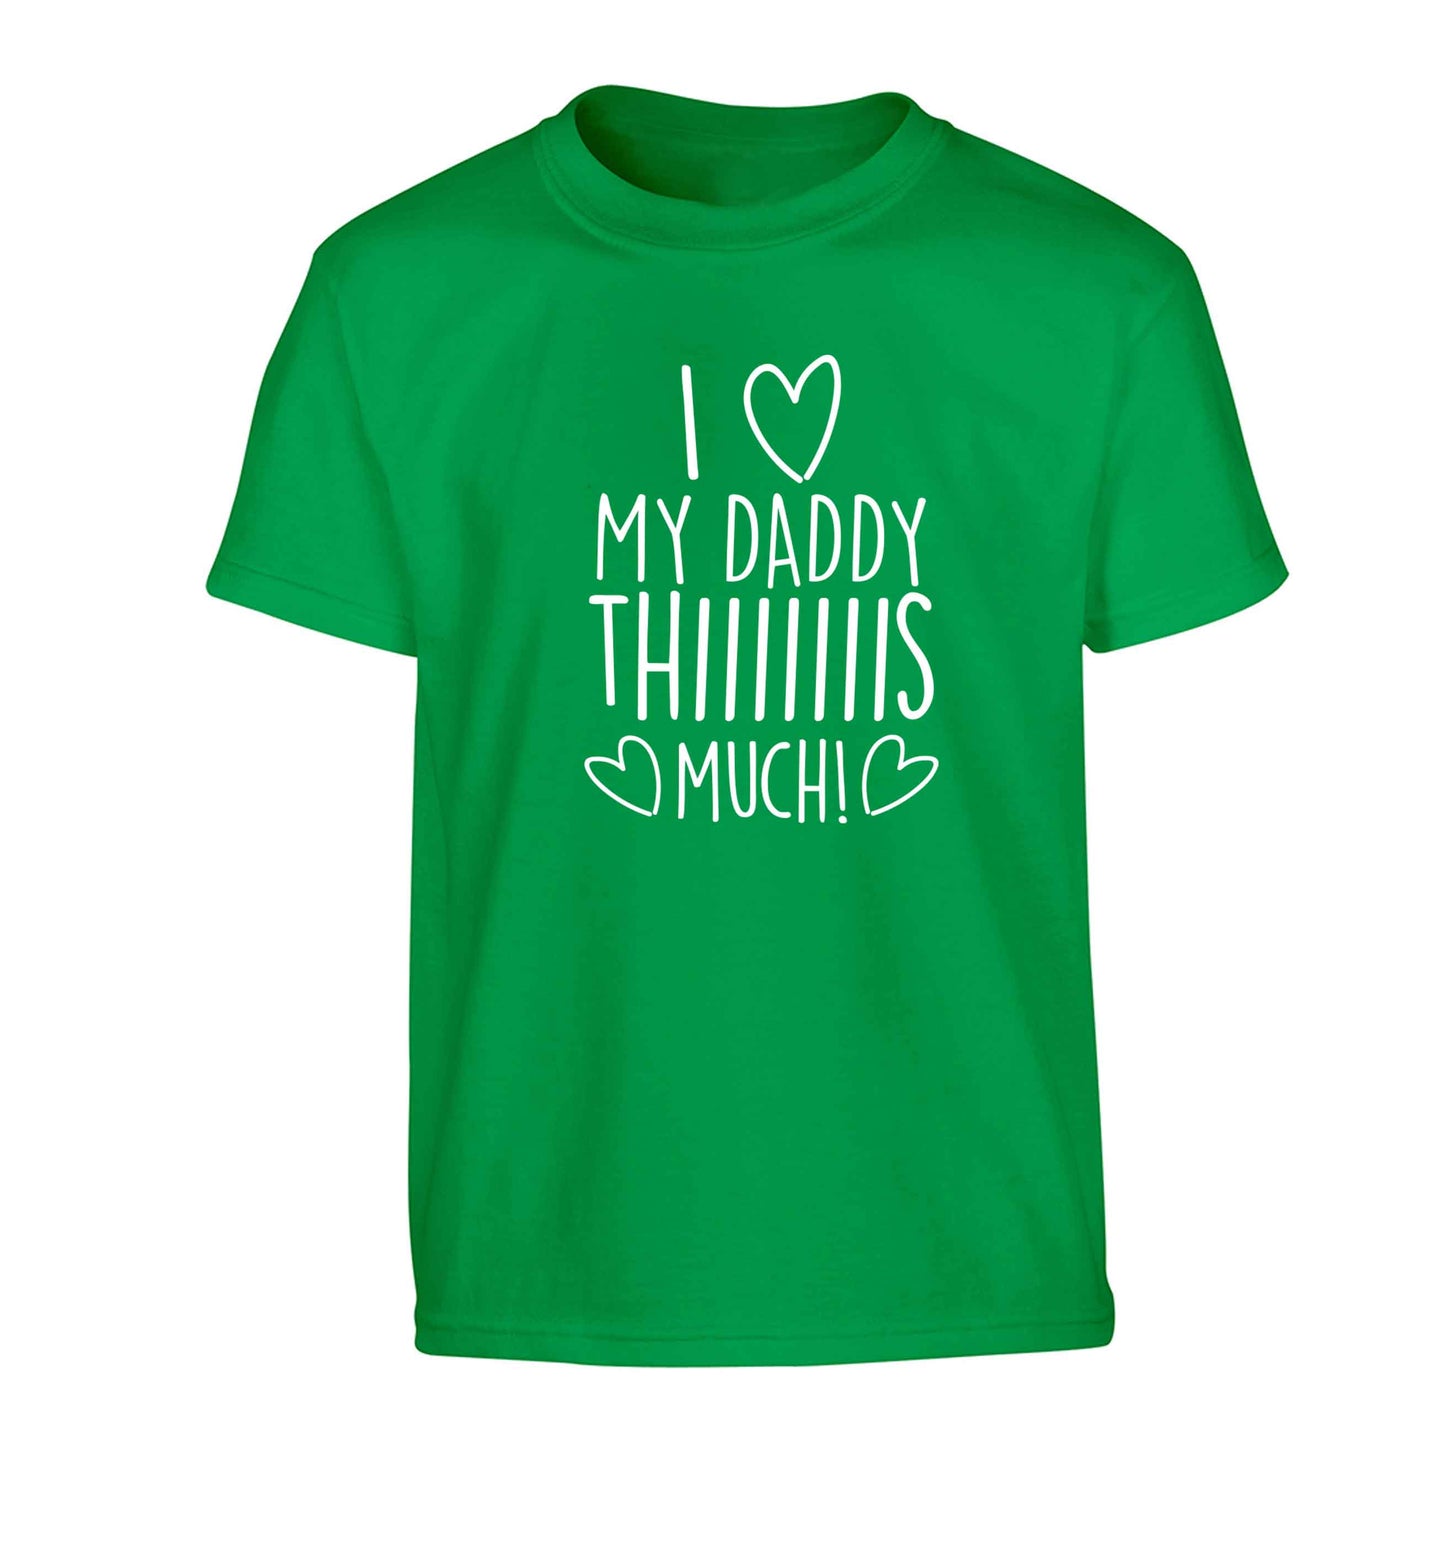 I love my daddy thiiiiis much! Children's green Tshirt 12-13 Years